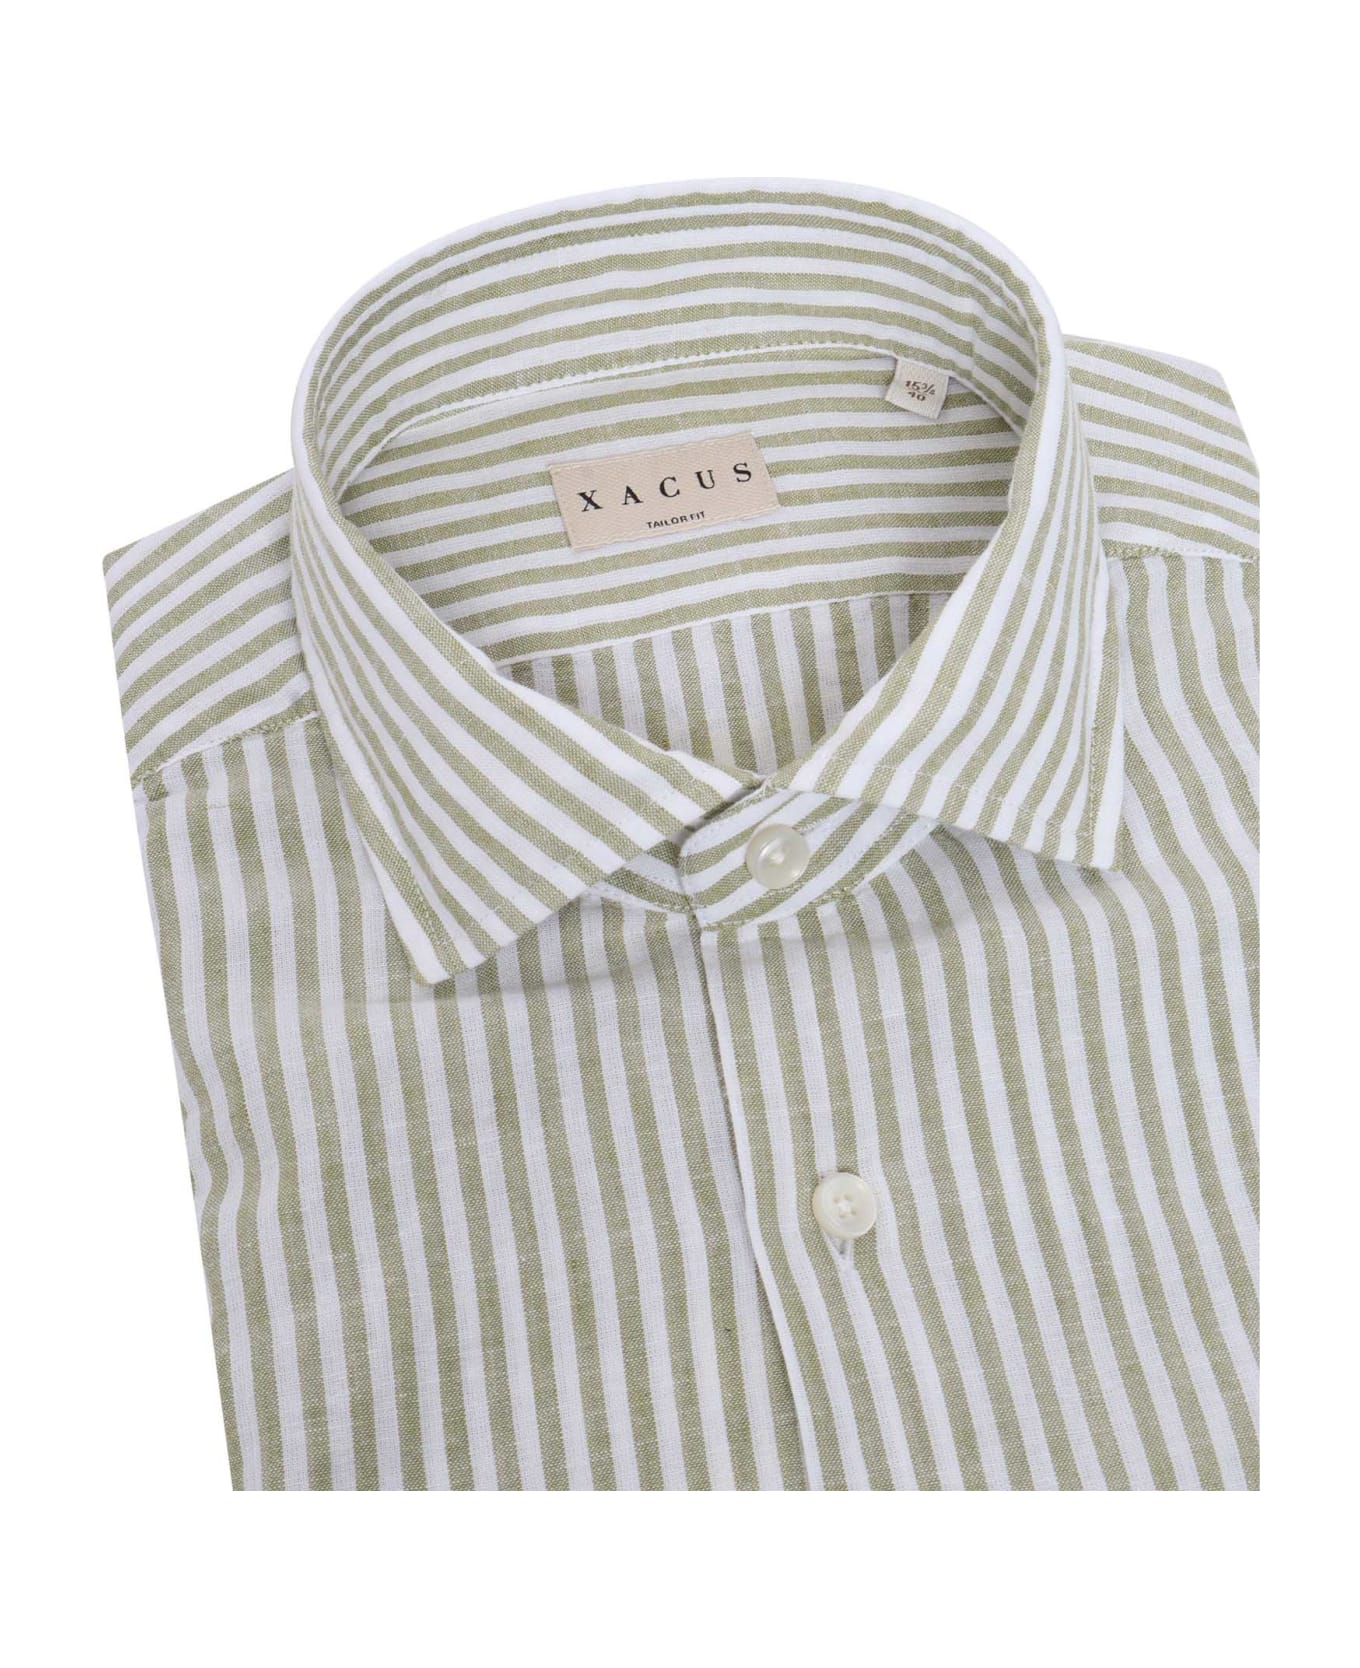 Xacus Striped Shirt - MULTICOLOR